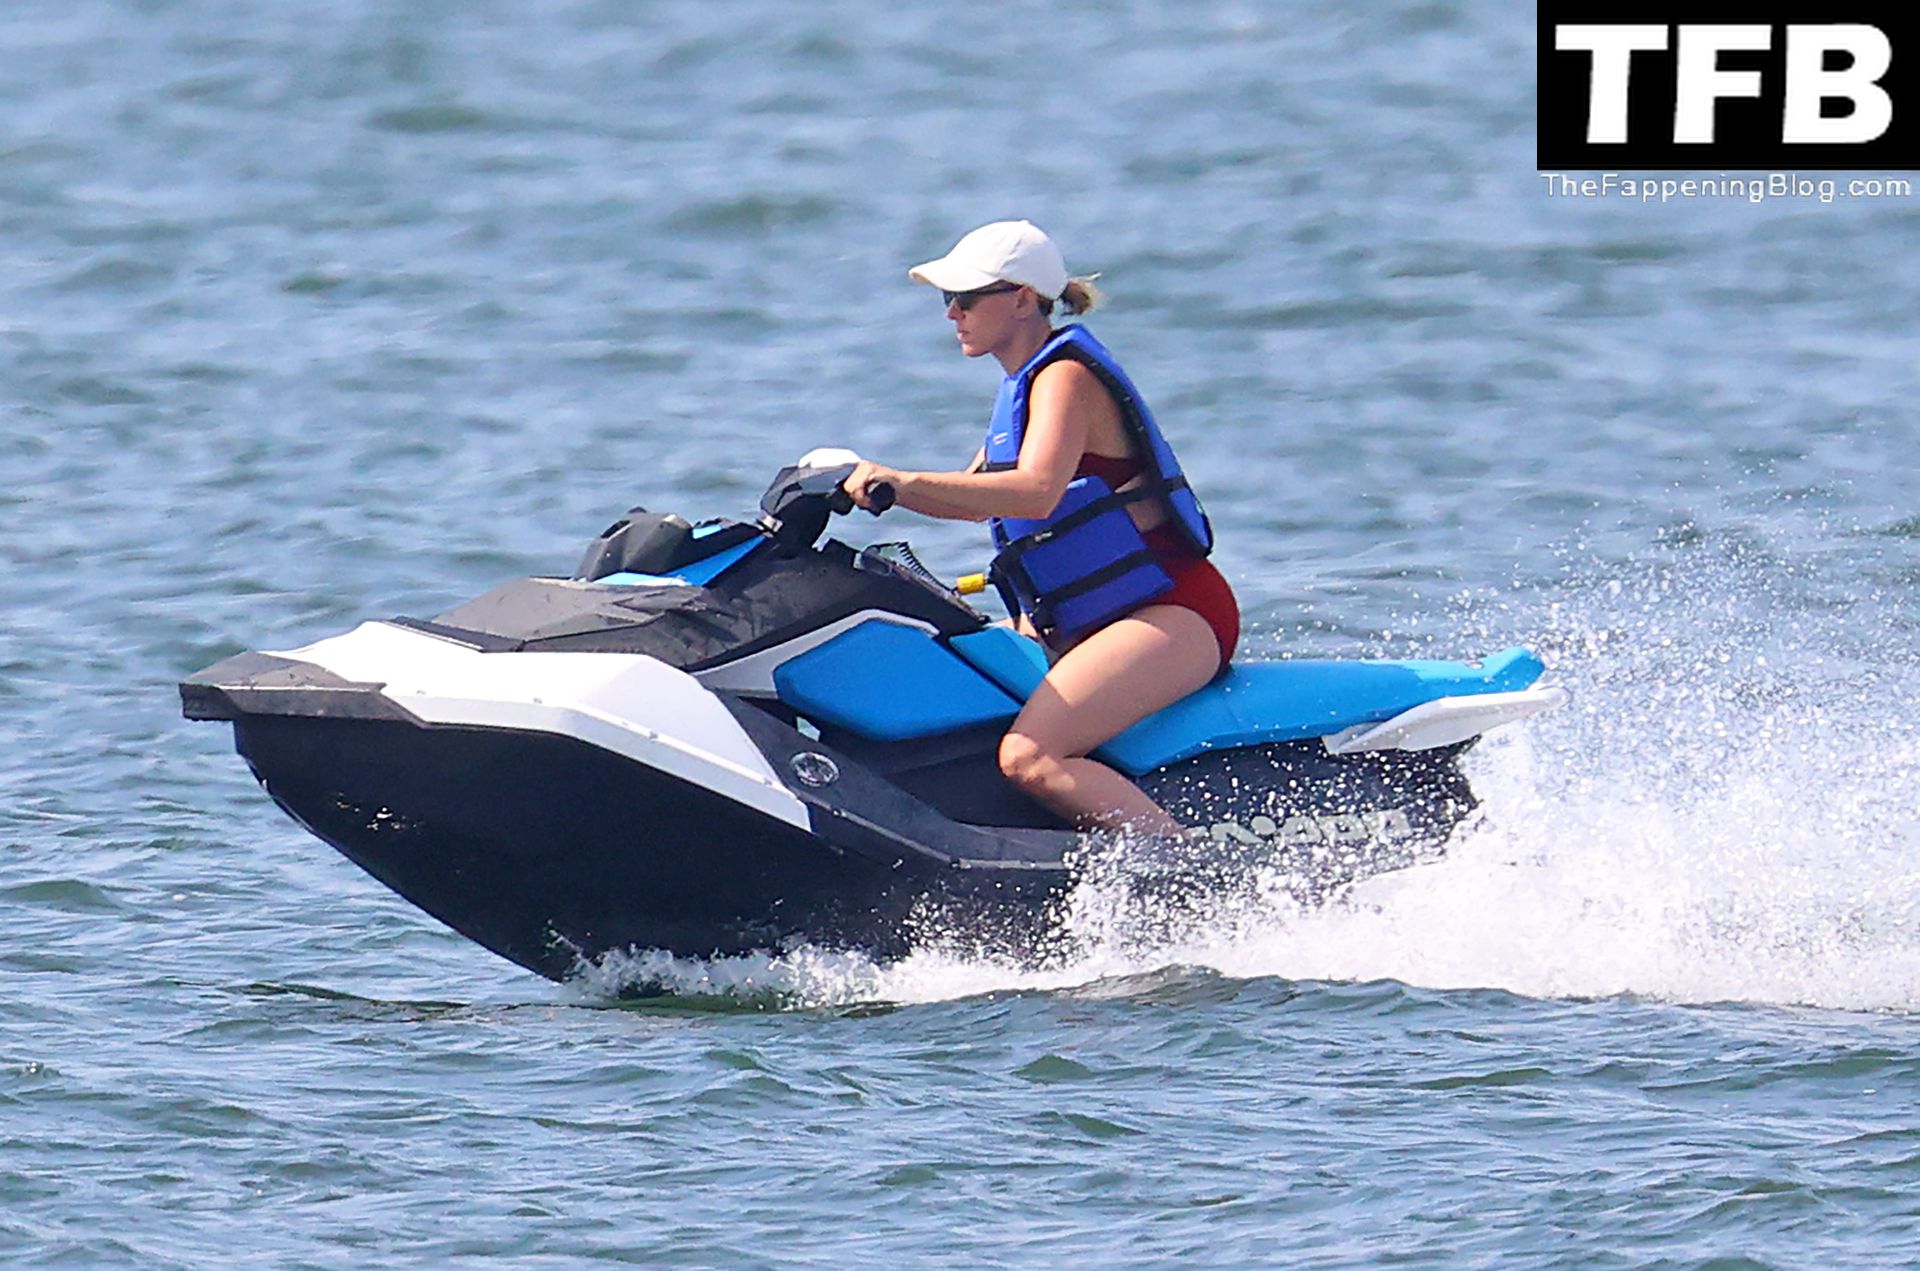 Scarlett Johansson Hits the Ocean in a Red Bikini in East Hampton (97 Photos)